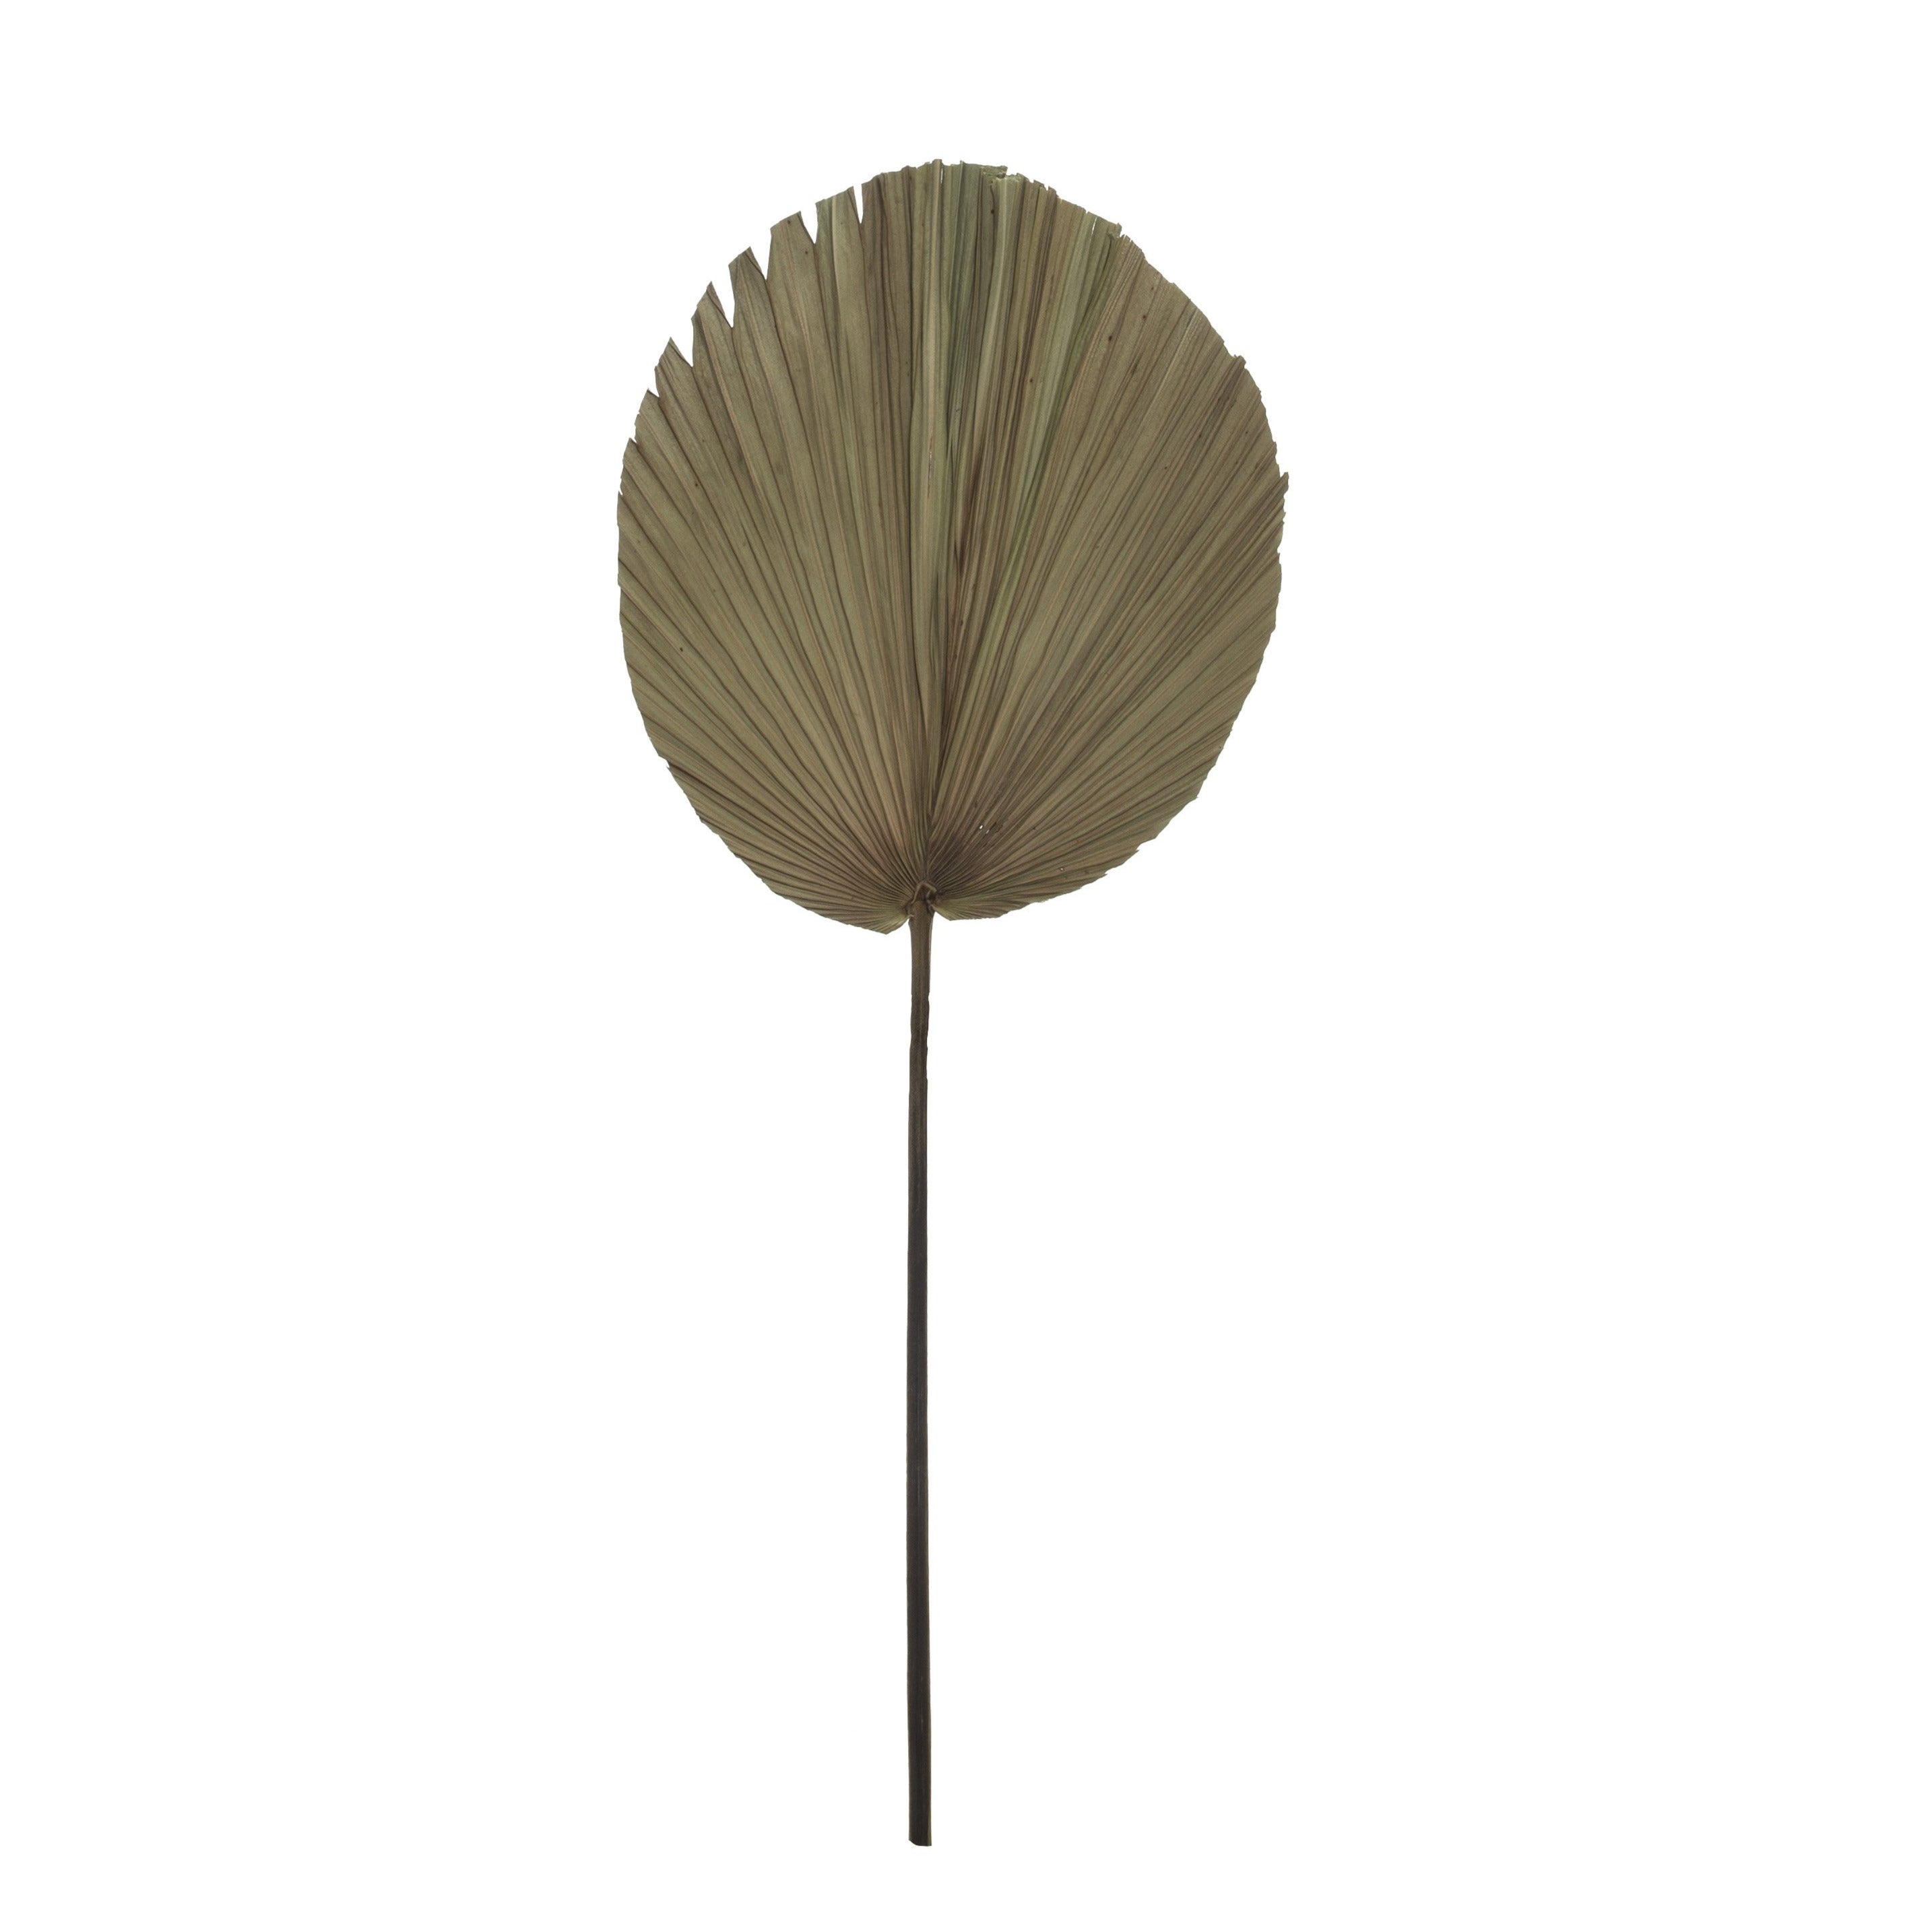 Natural Dry Palm Fan Frond Leaf Stem 90cm - Style 3